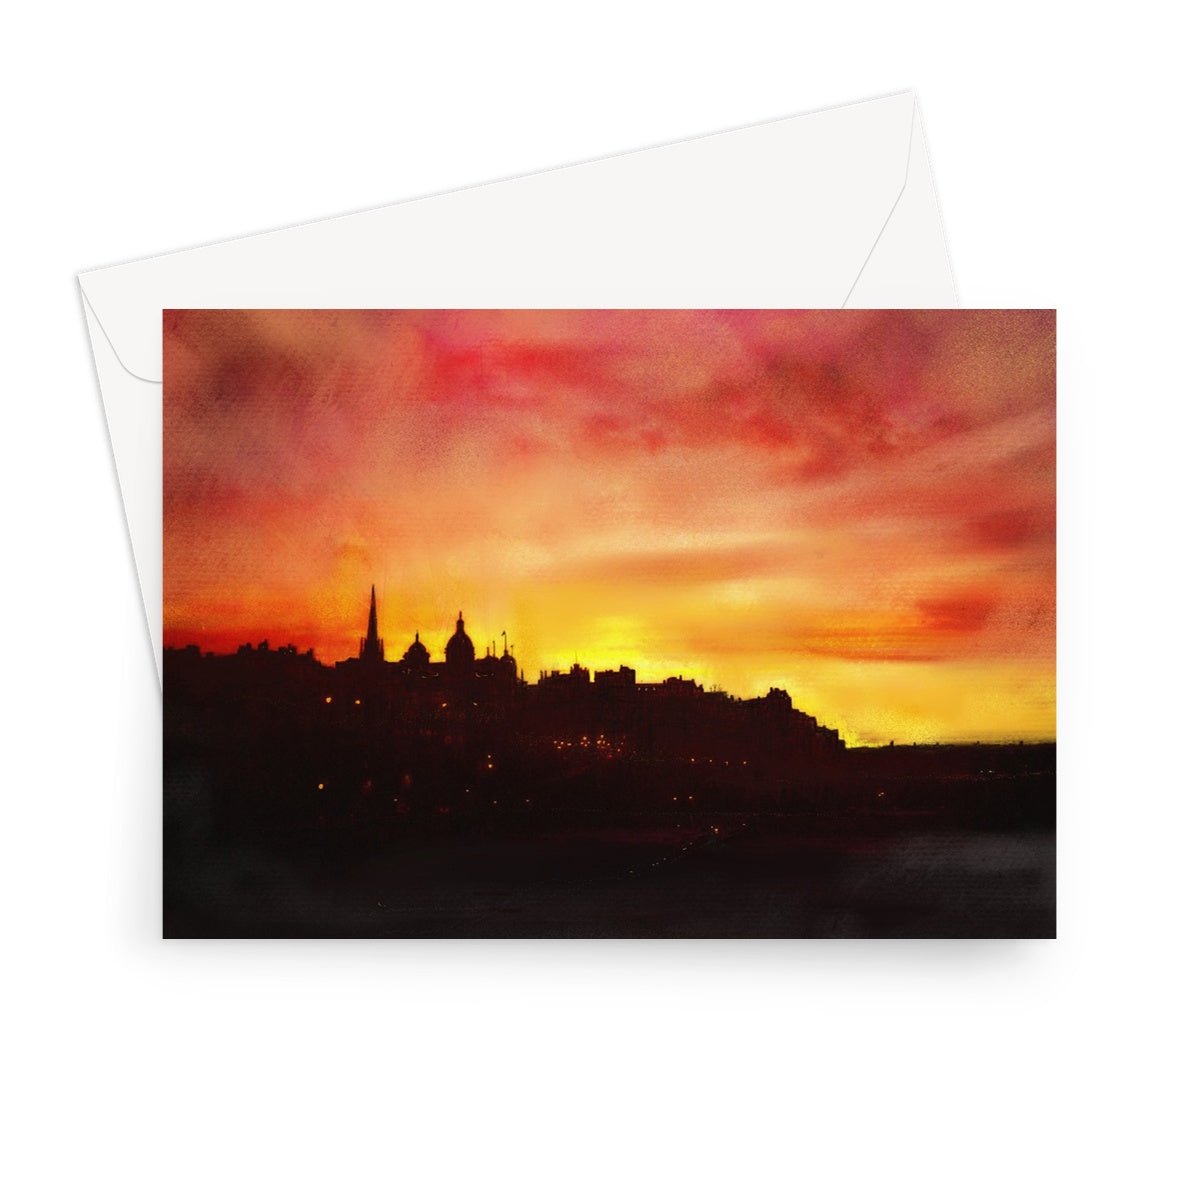 Edinburgh Sunset Art Gifts Greeting Card-Greetings Cards-Edinburgh & Glasgow Art Gallery-7"x5"-10 Cards-Paintings, Prints, Homeware, Art Gifts From Scotland By Scottish Artist Kevin Hunter